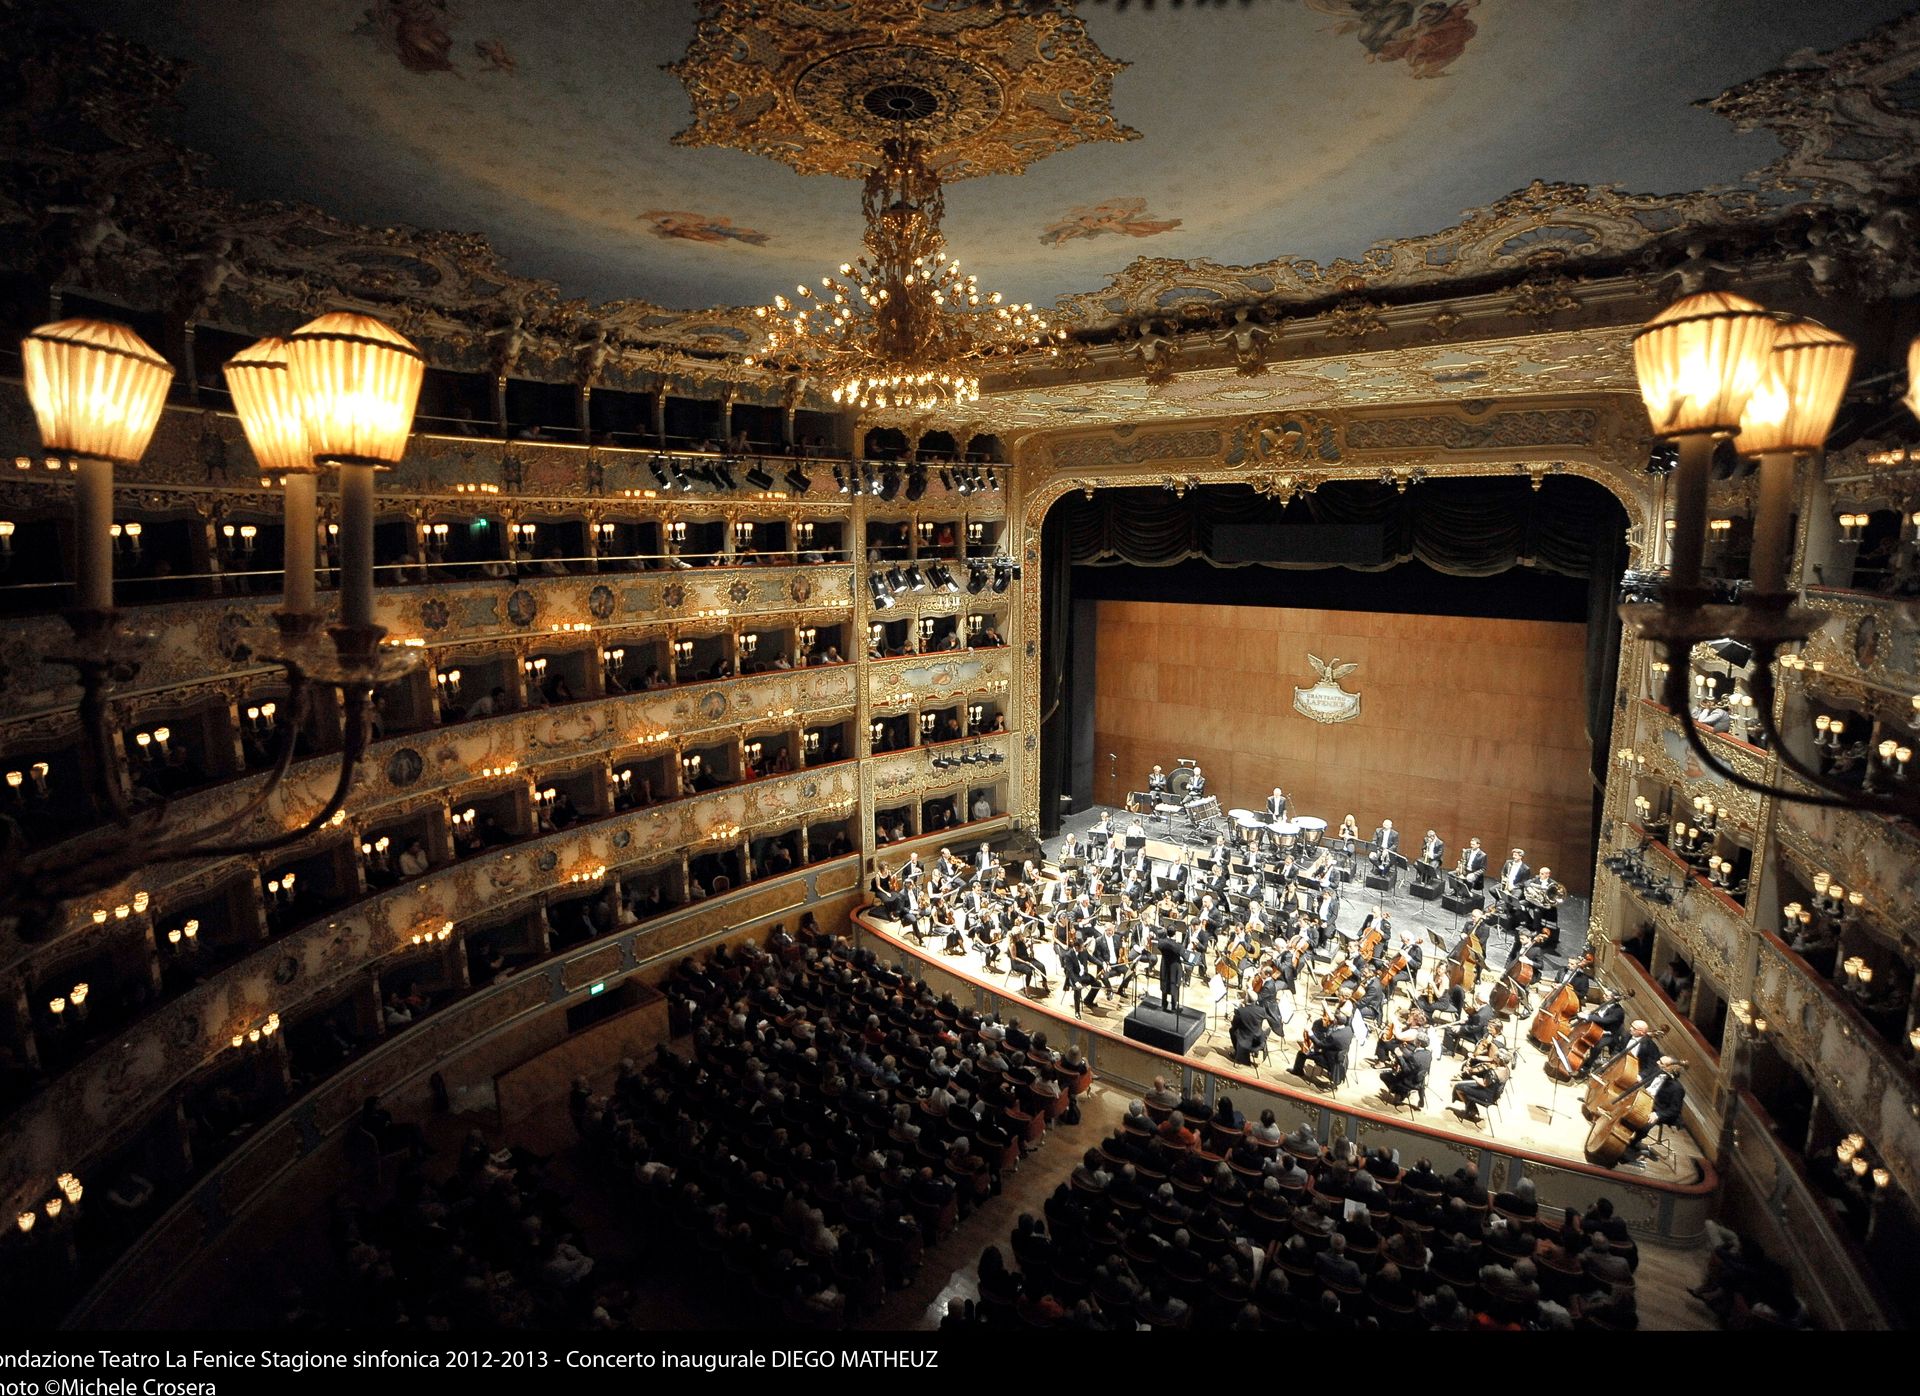 Teatro La Fenice, Venise - Italie ©Michele Crosera